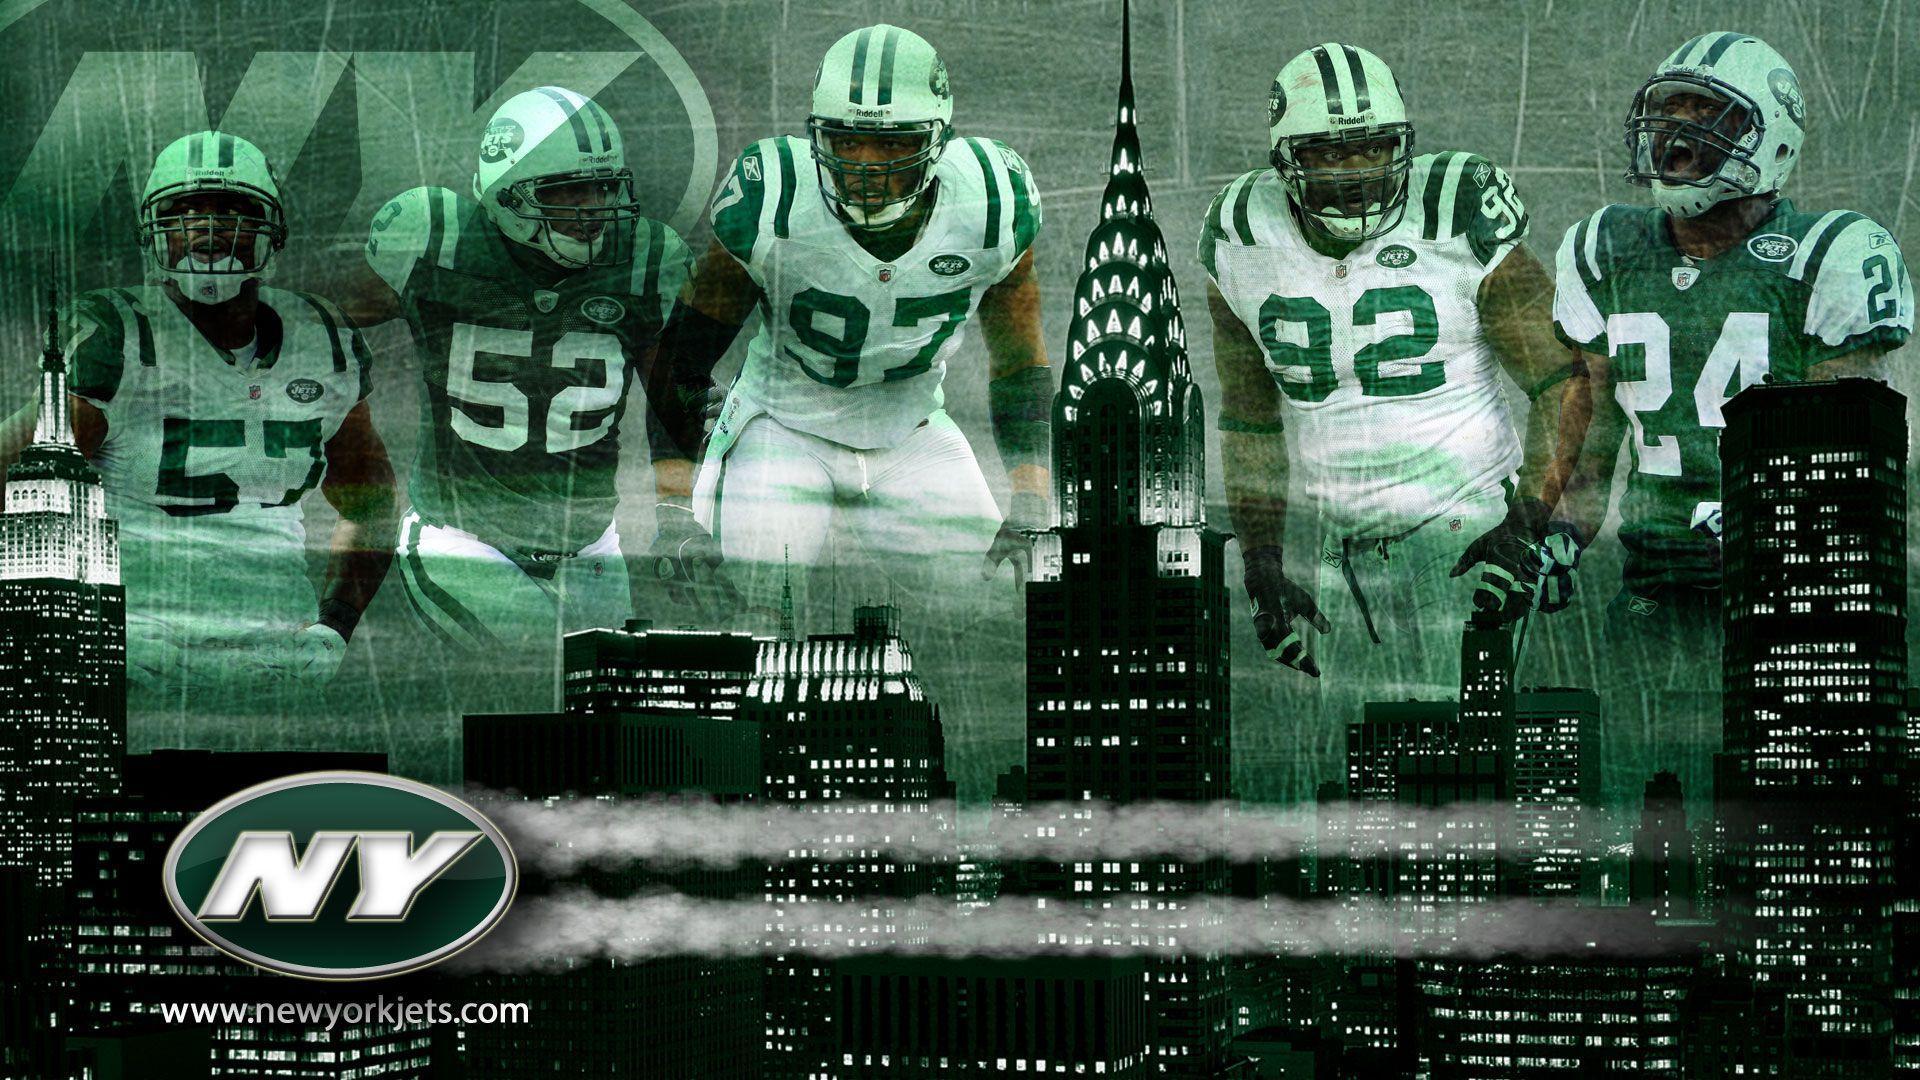 NY Jets Wallpaper and Screensaver